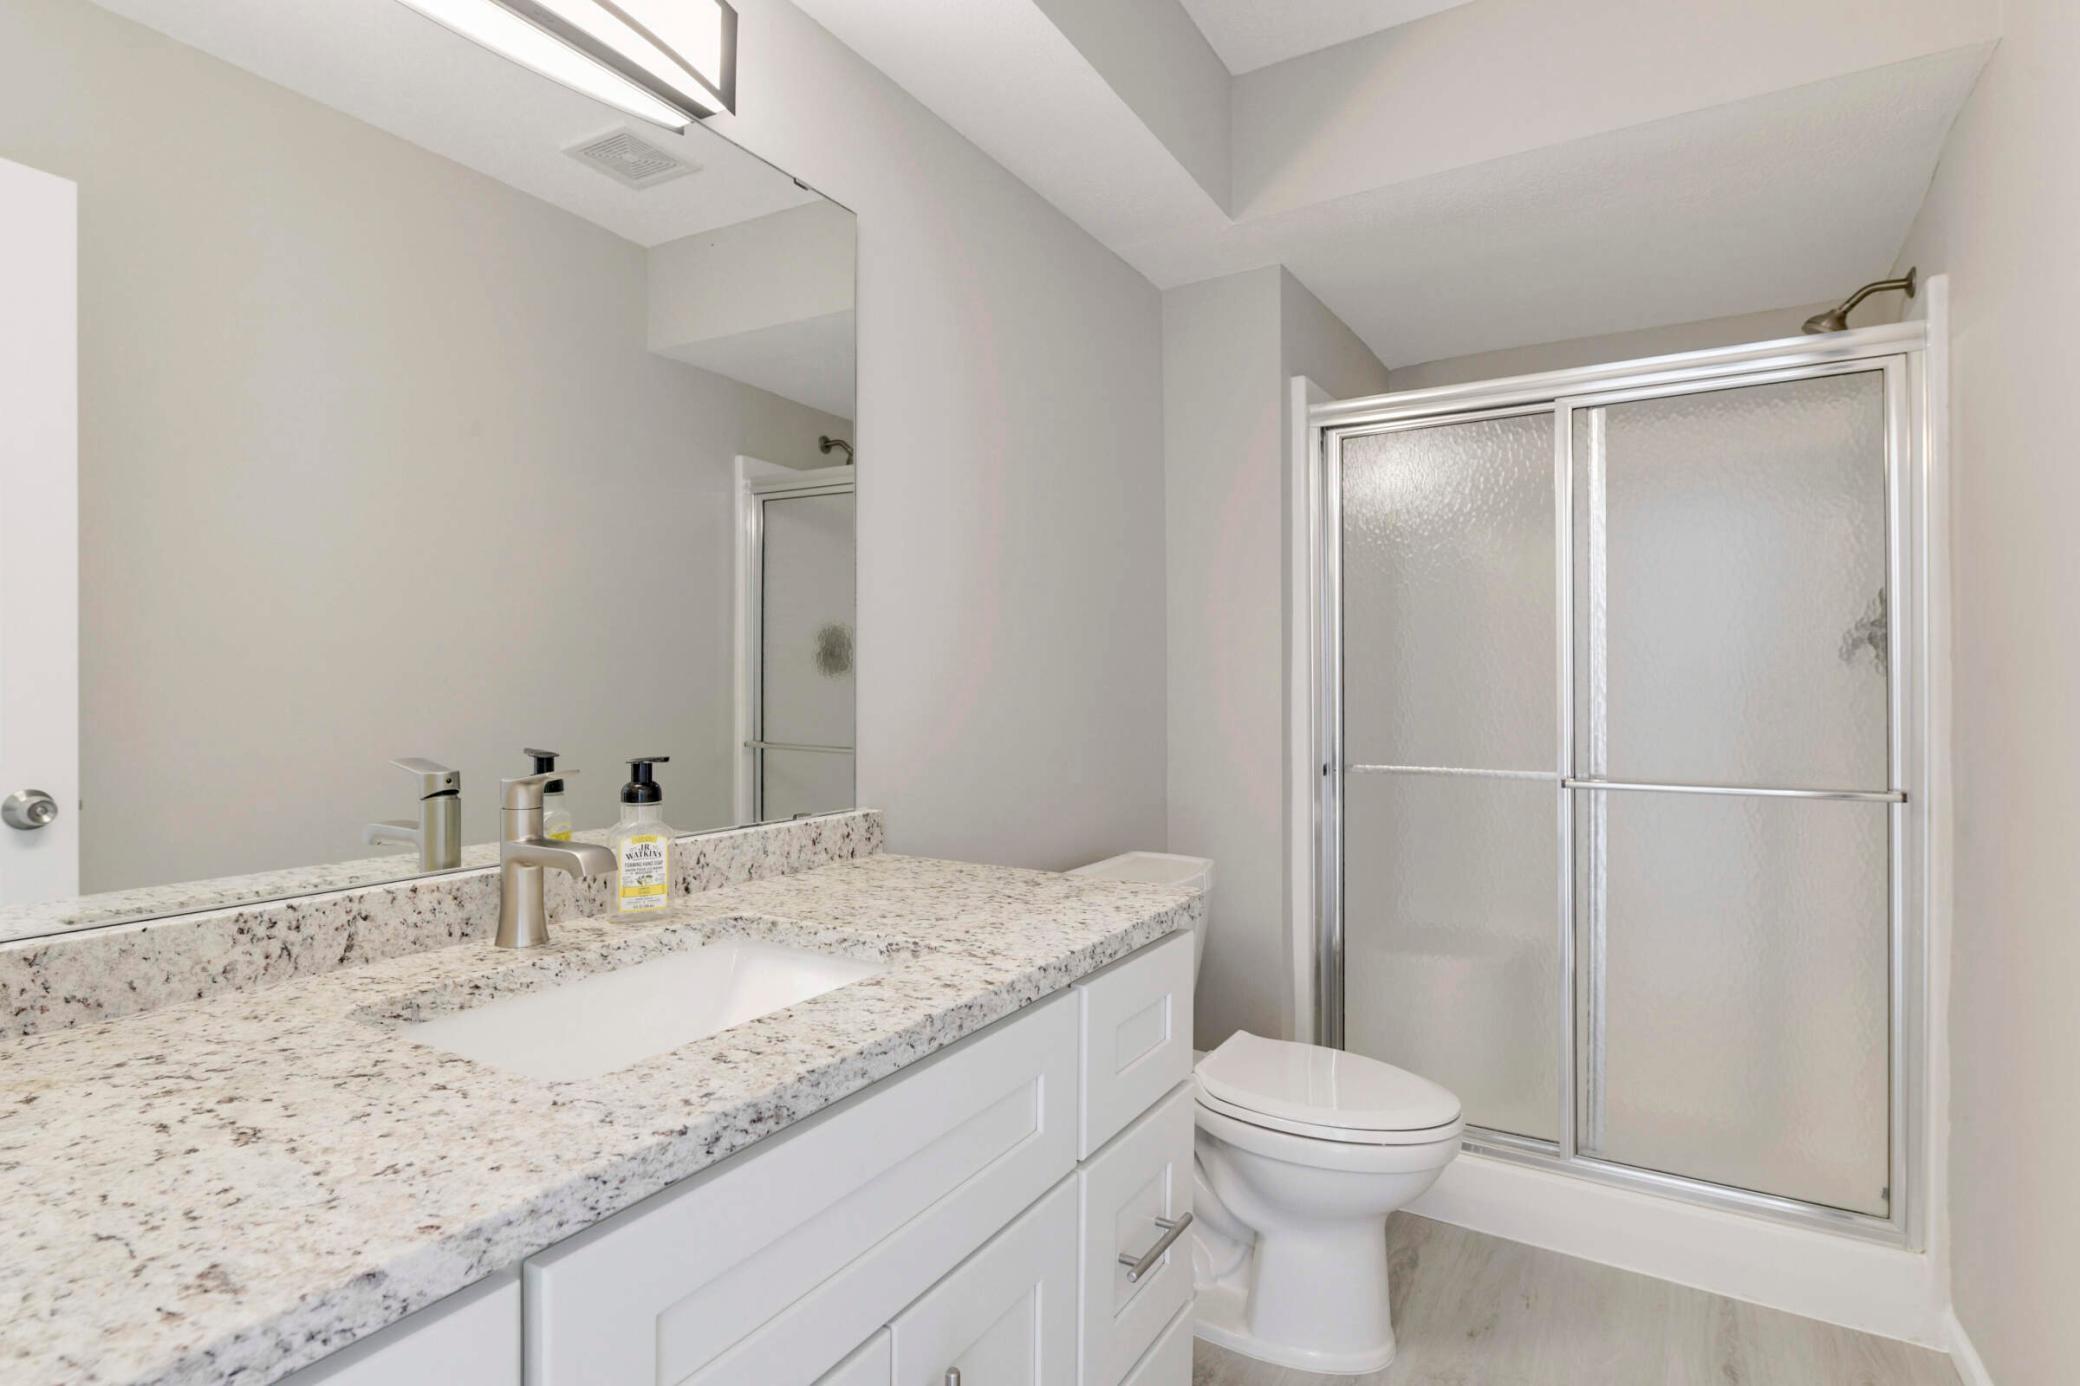 Beautiful white vanity and granite countertop in the main floor 3/4 bathroom